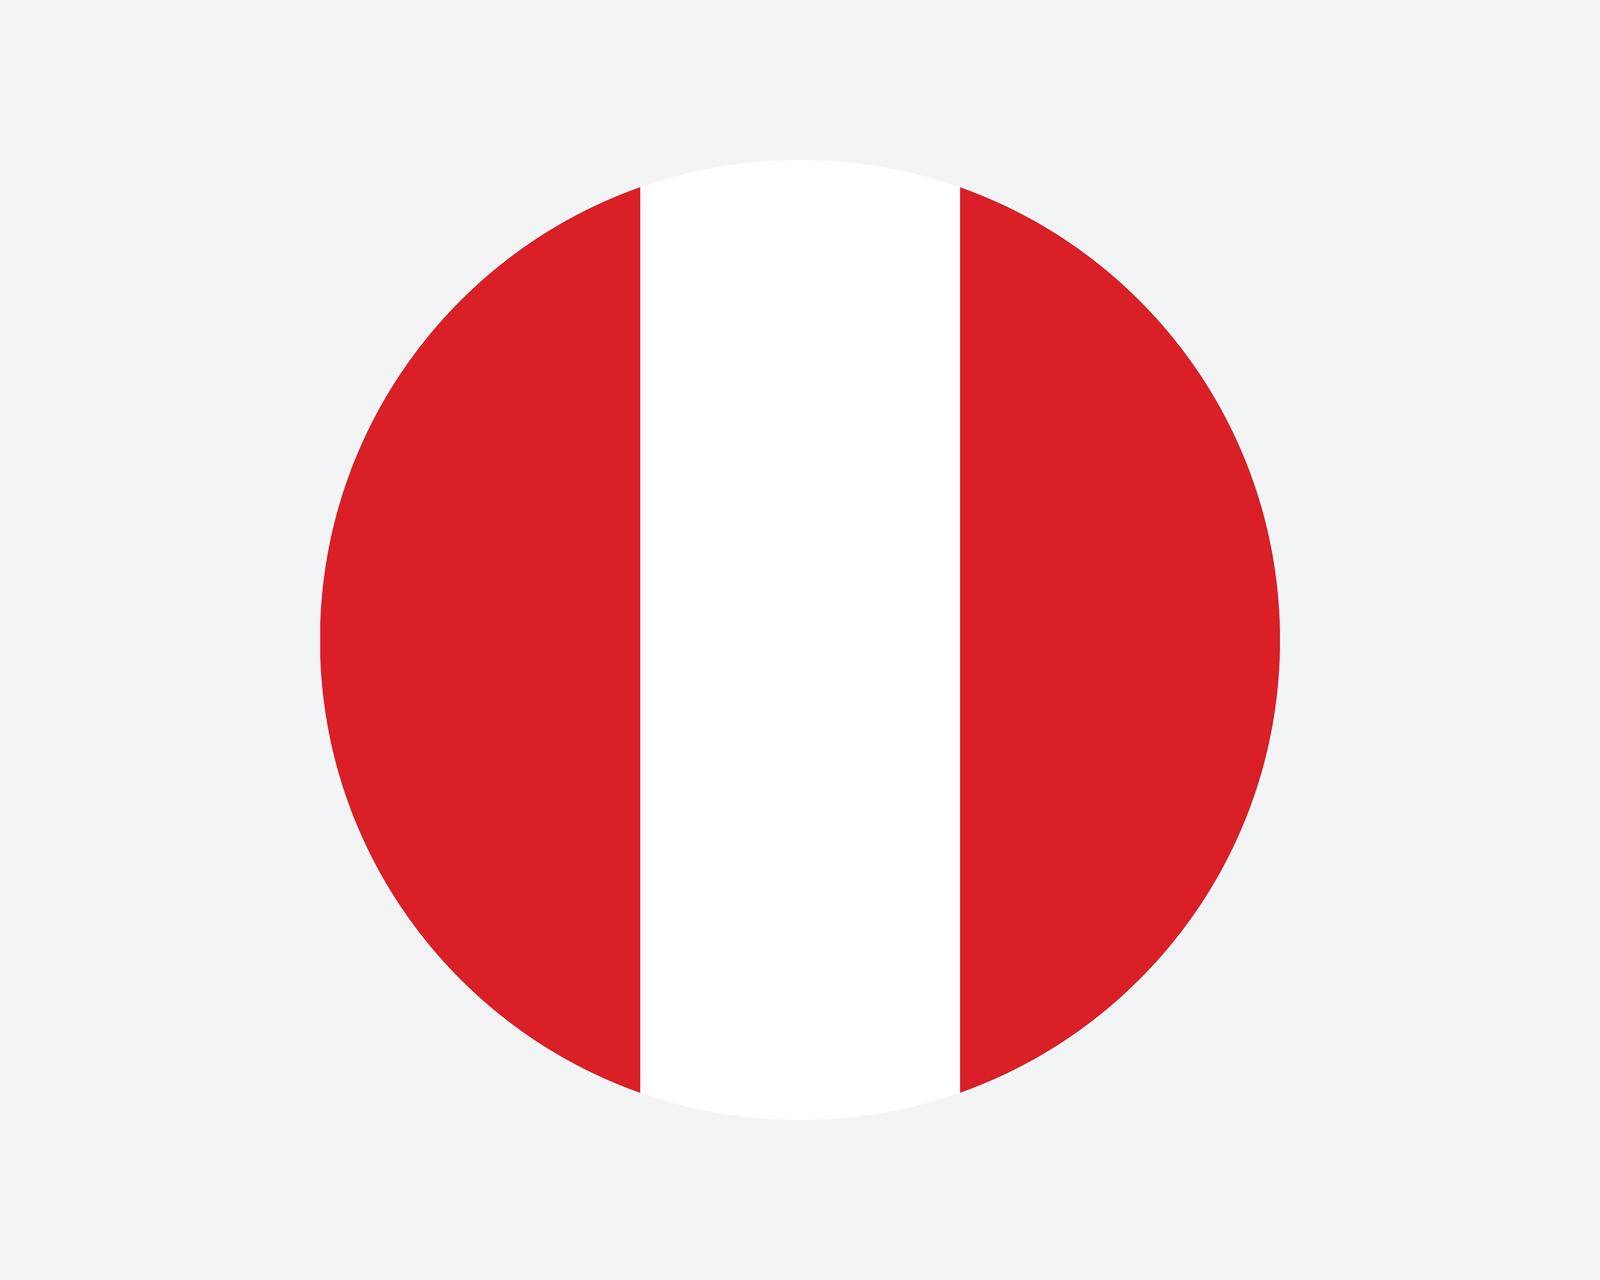 Peru Round Country Flag. Peruvian Circle National Flag. Republic of Peru Circular Shape Button Banner. EPS Vector Illustration.